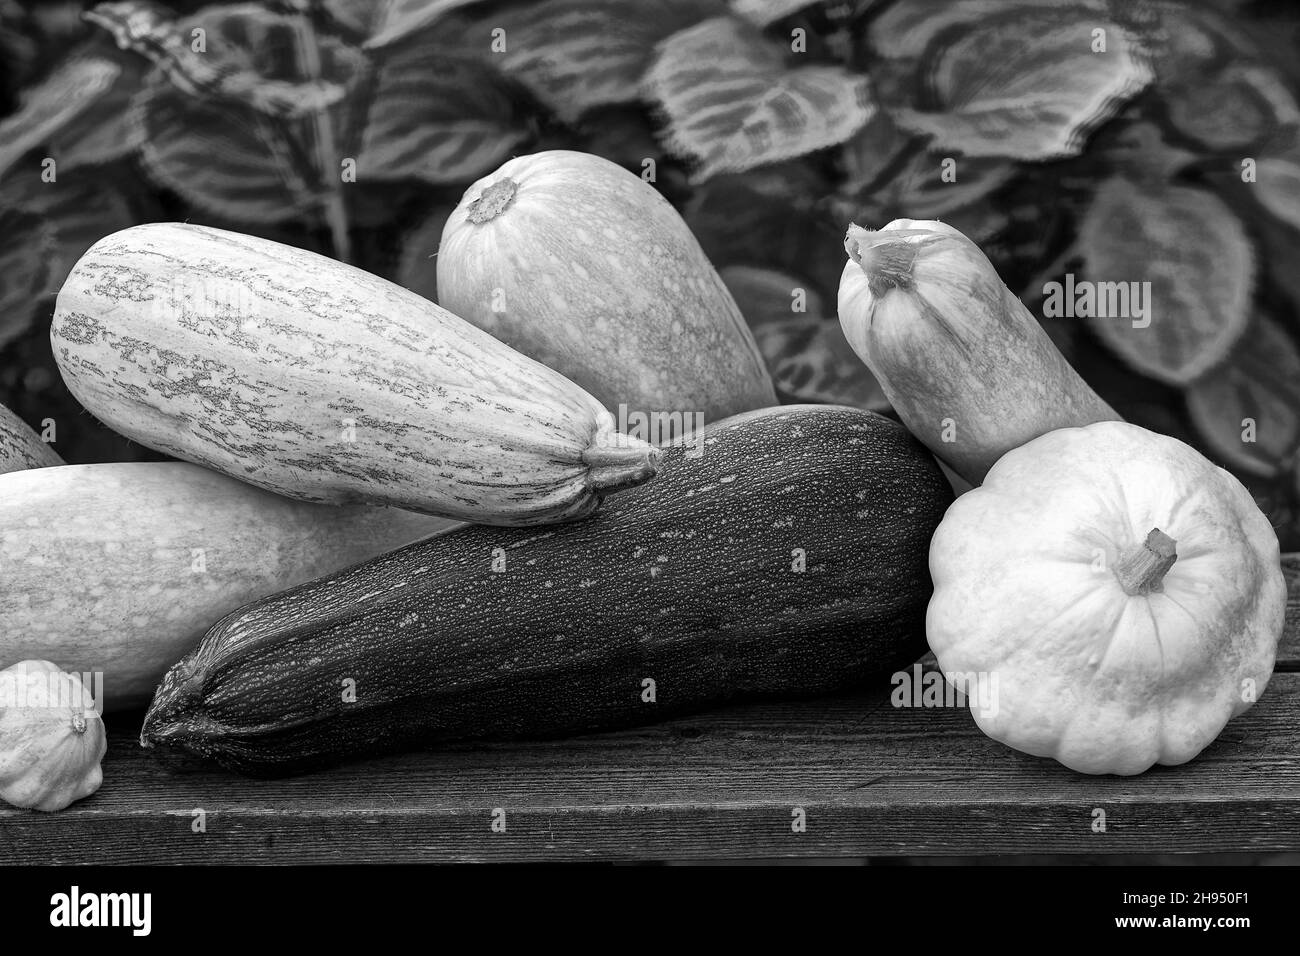 Photo vegetables,squash Stock Photo